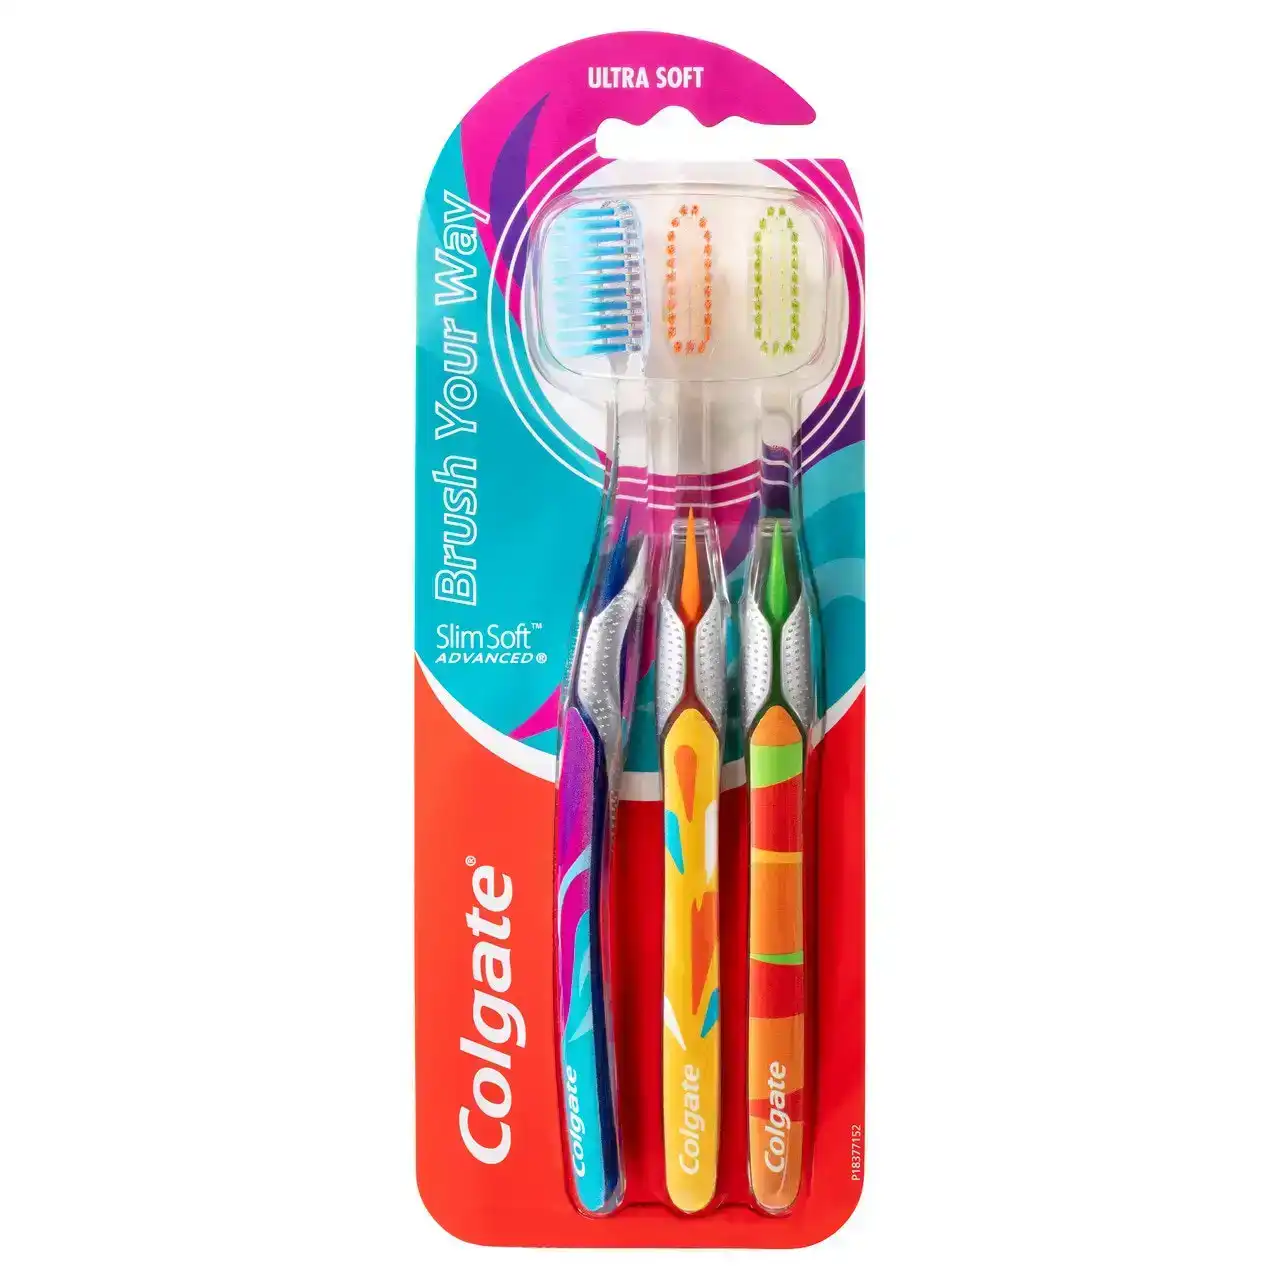 Colgate Slim Soft Advanced Manual Toothbrush, 3 Pack, Ultra Soft Bristles